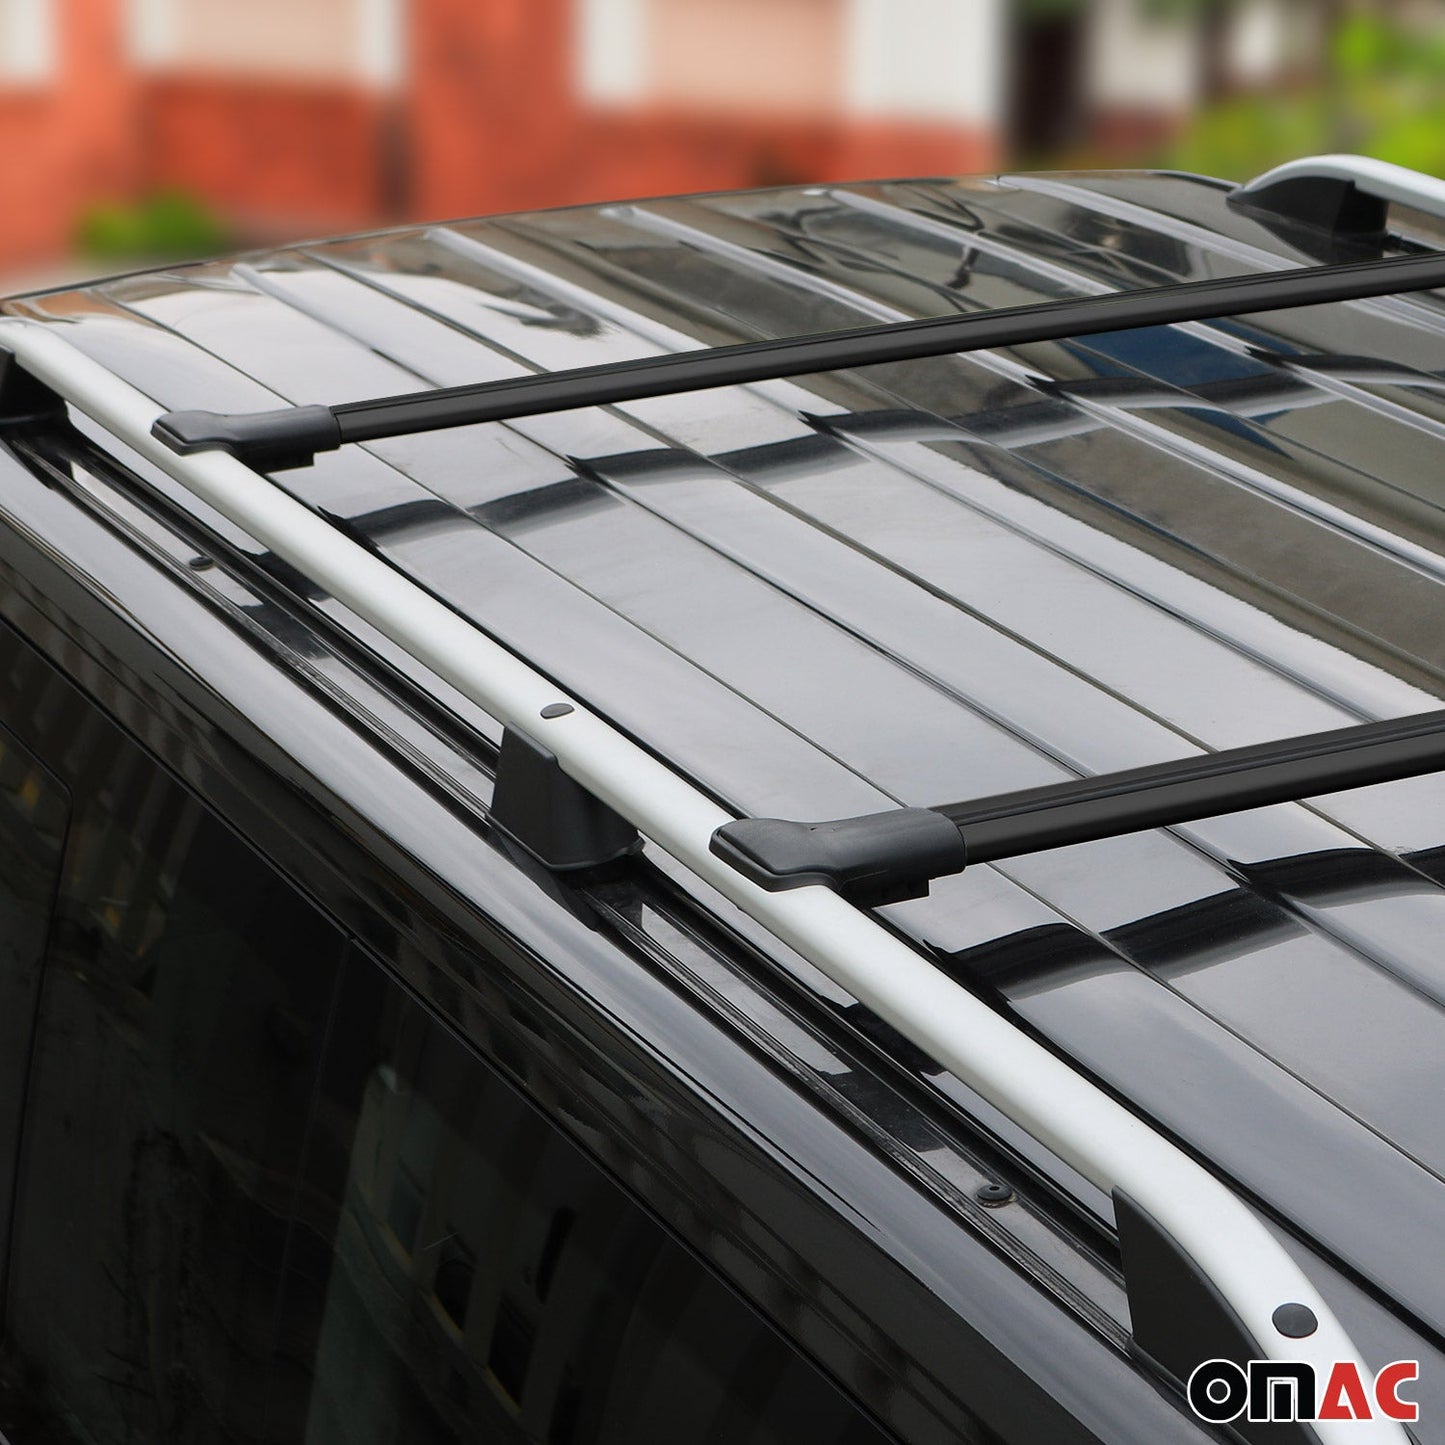 OMAC Roof Rack Cross Bars Luggage Carrier for Mitsubishi Outlander 2014-2020 Black G002401